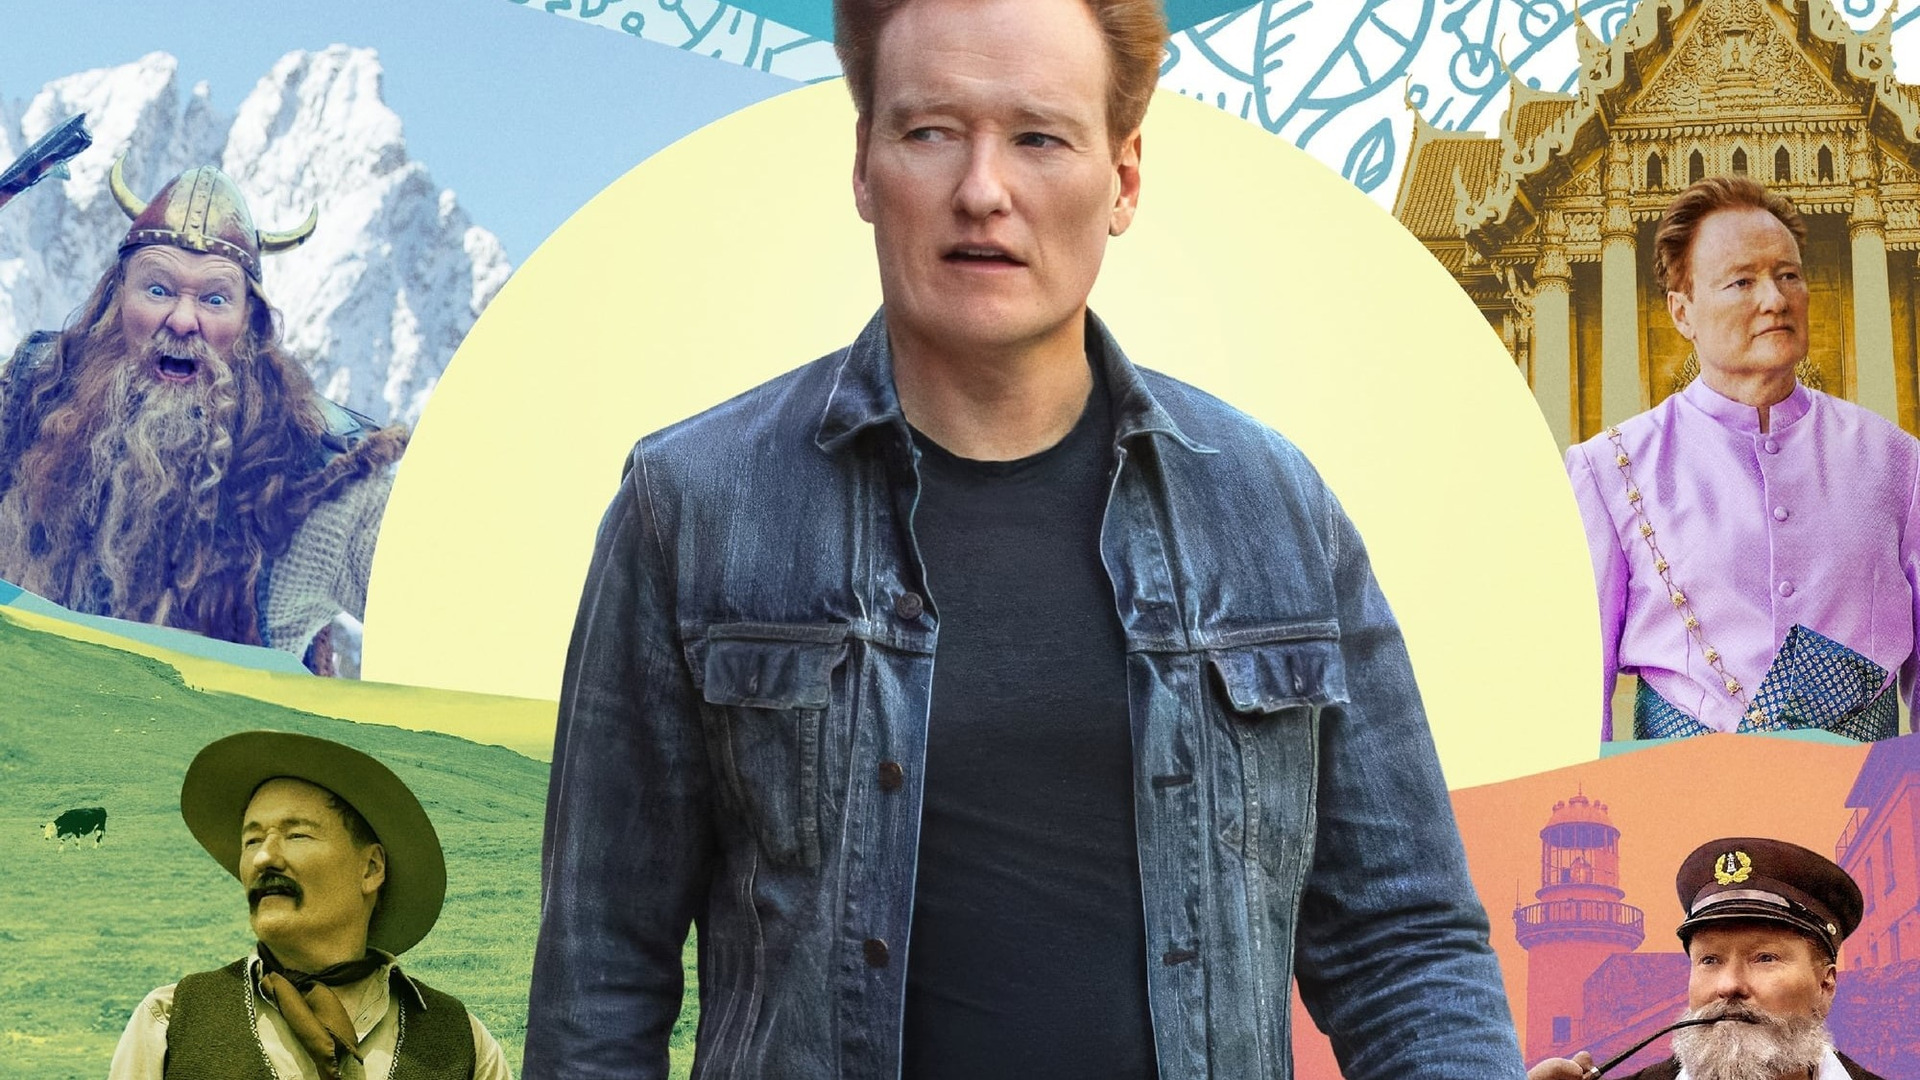 Show Conan O'Brien Must Go